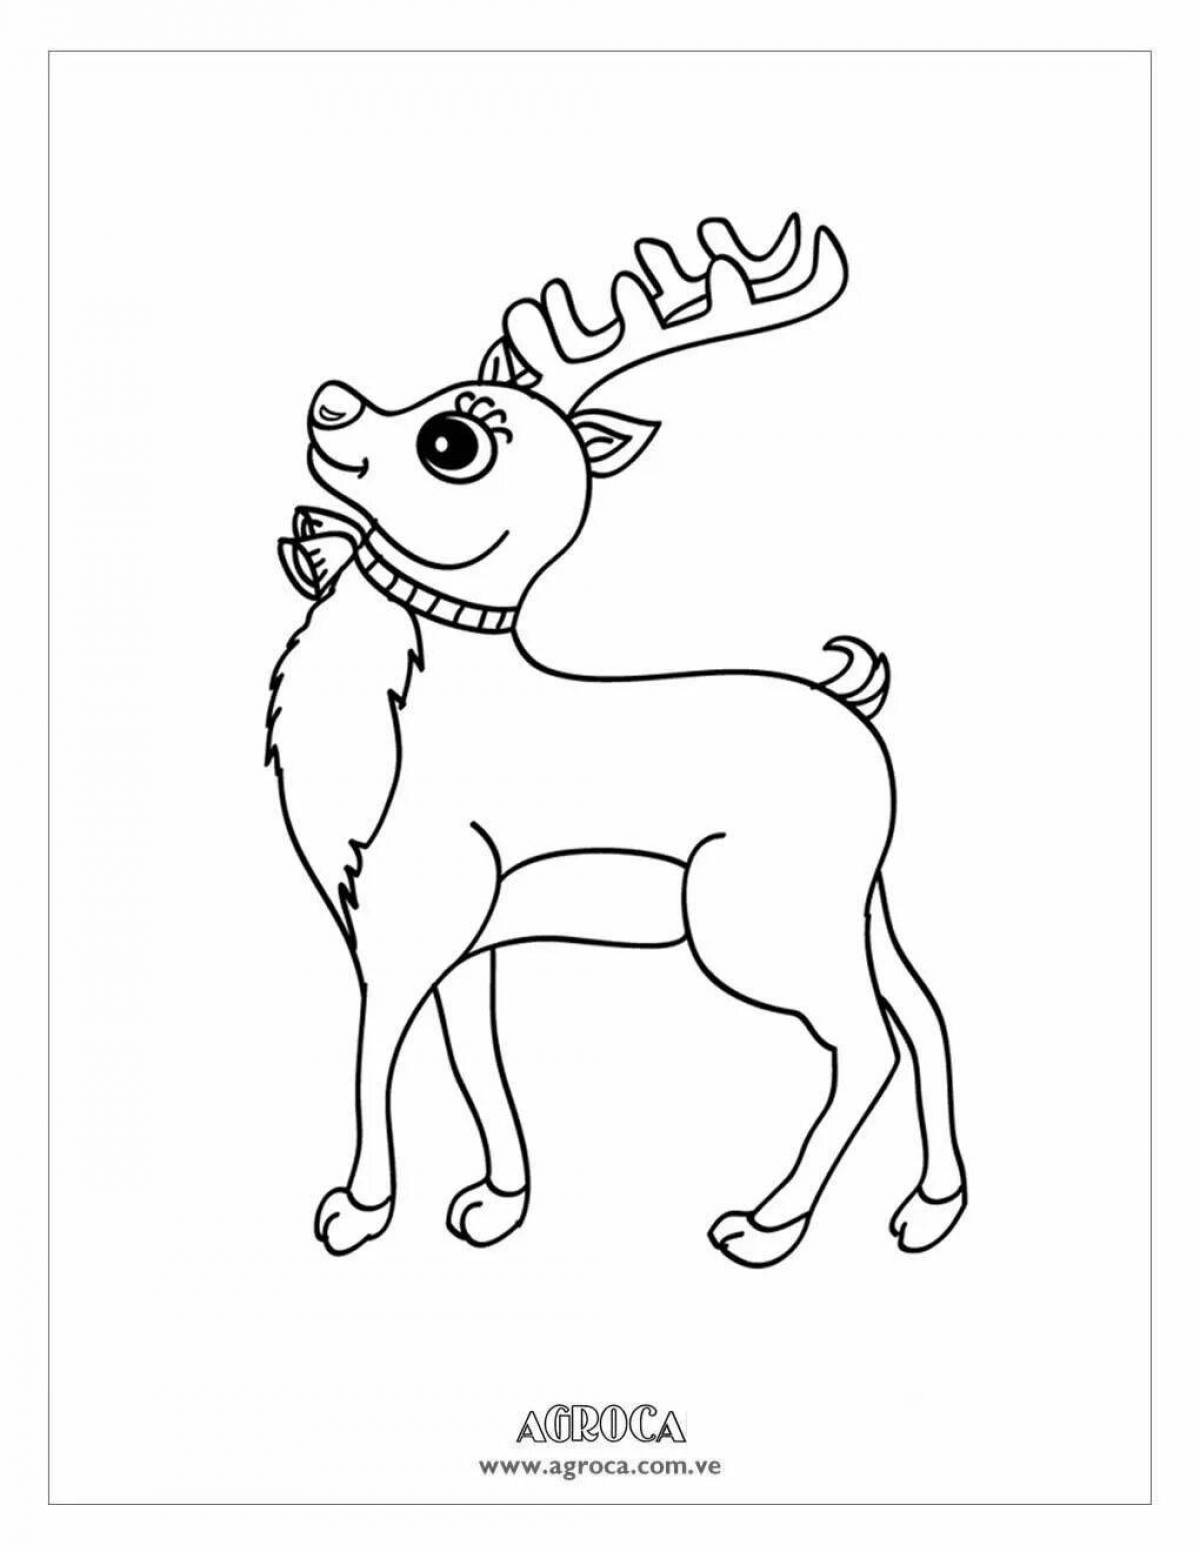 Coloring book of a joyful Christmas deer